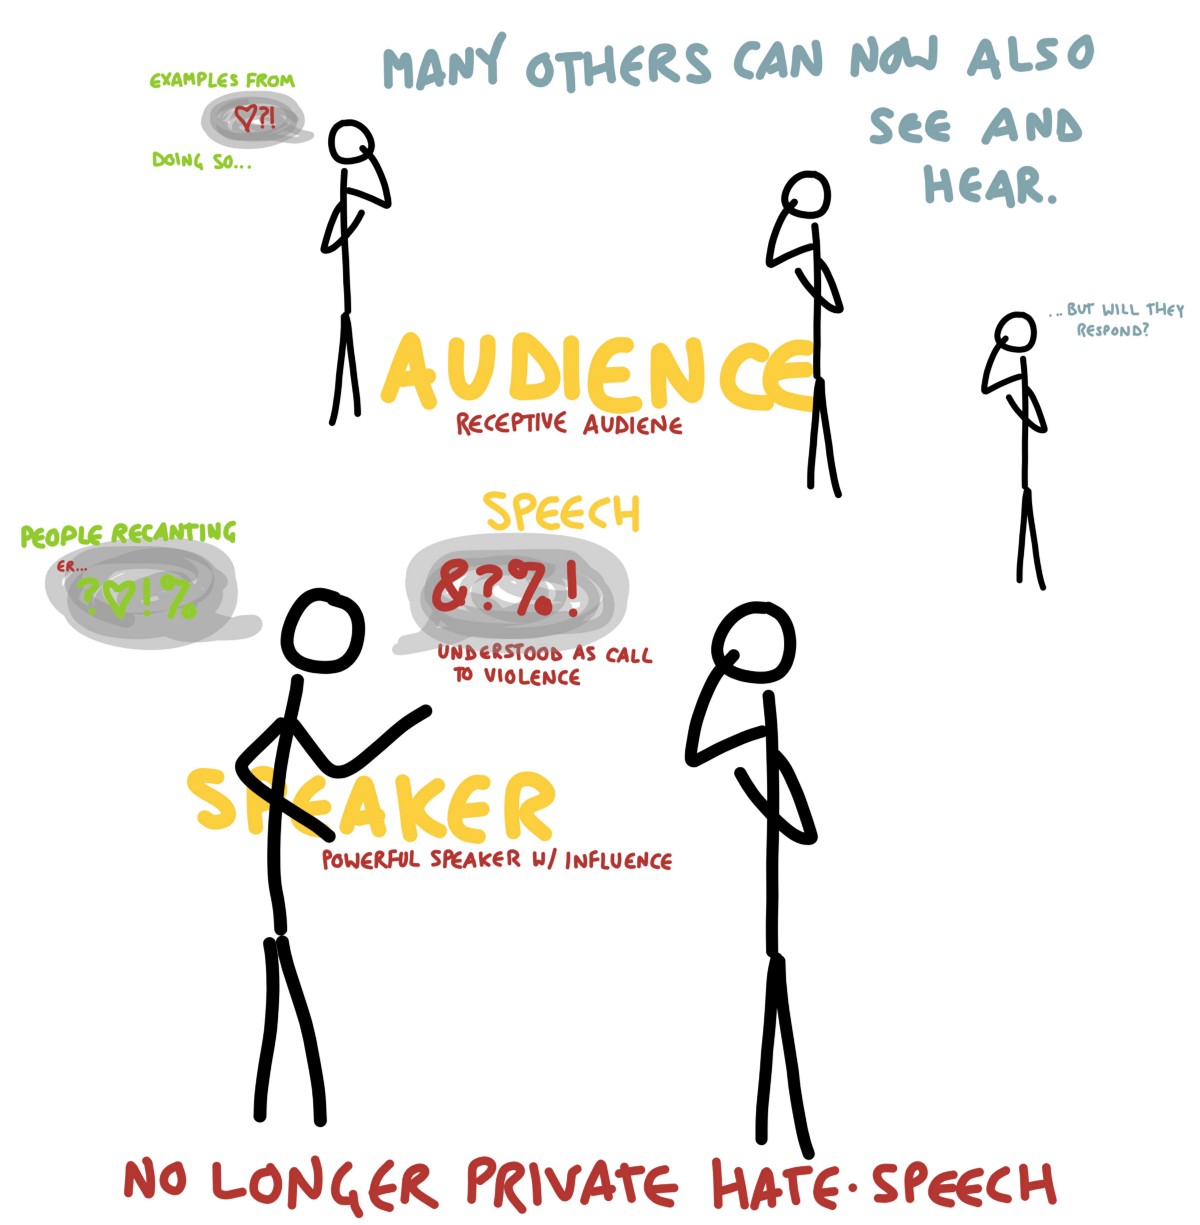 Flower speech: new responses to hatred online